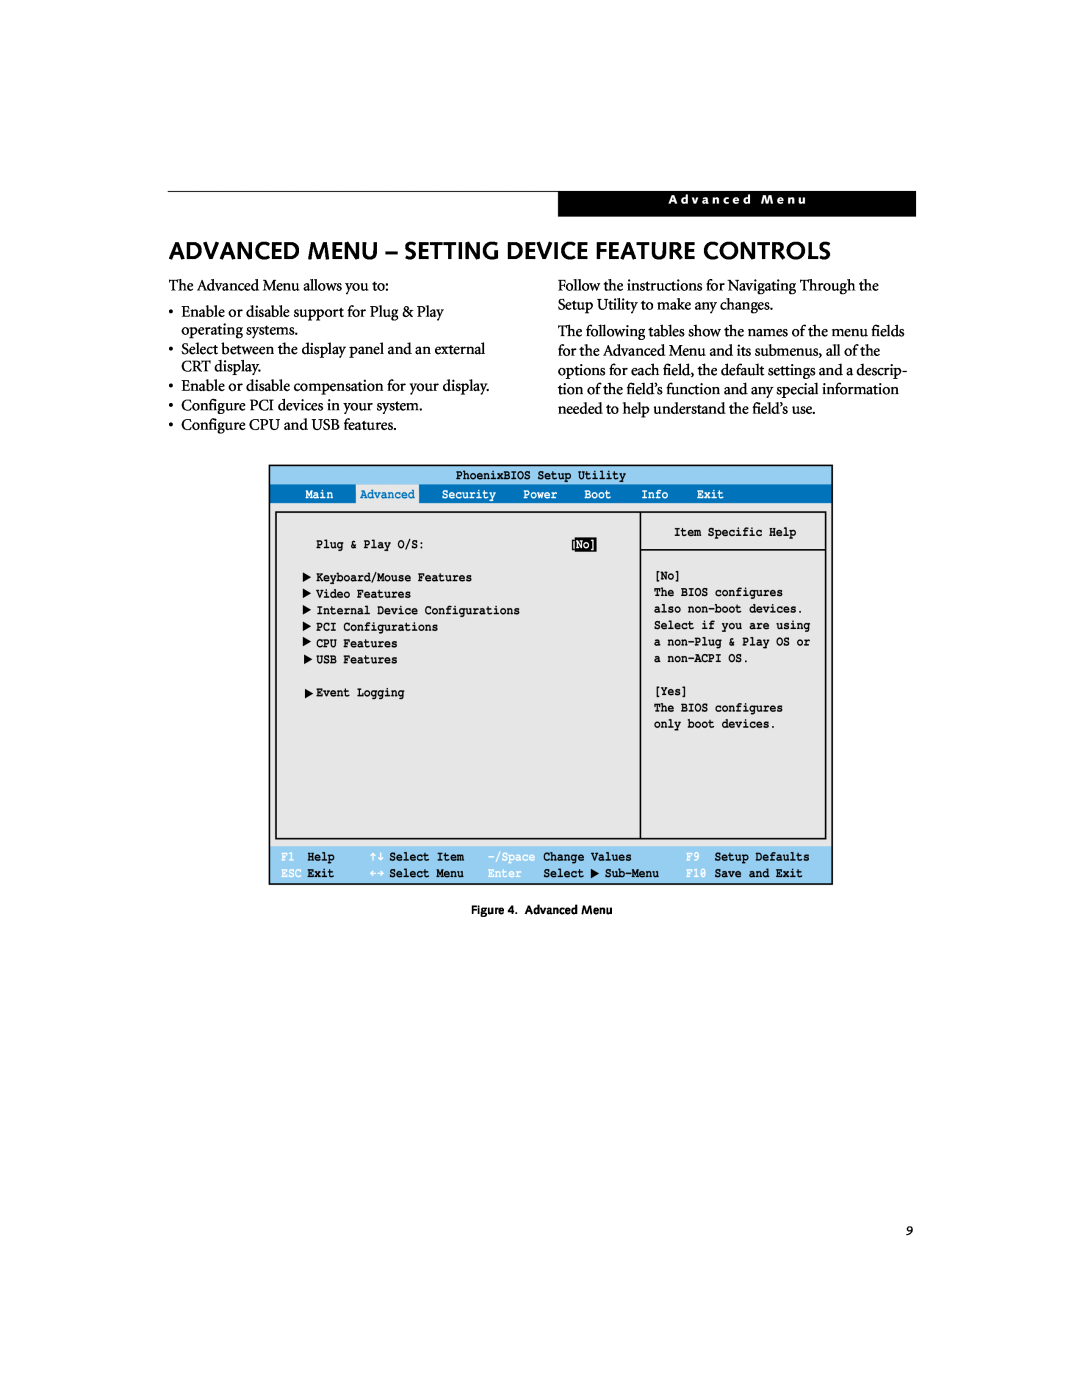 Fujitsu P-2046 manual Advanced Menu - Setting Device Feature Controls 